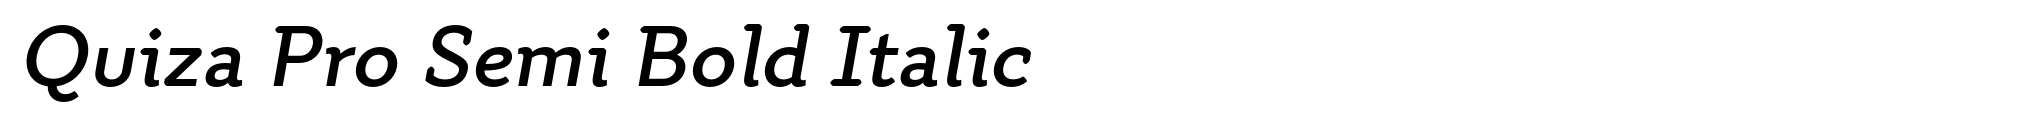 Quiza Pro Semi Bold Italic image